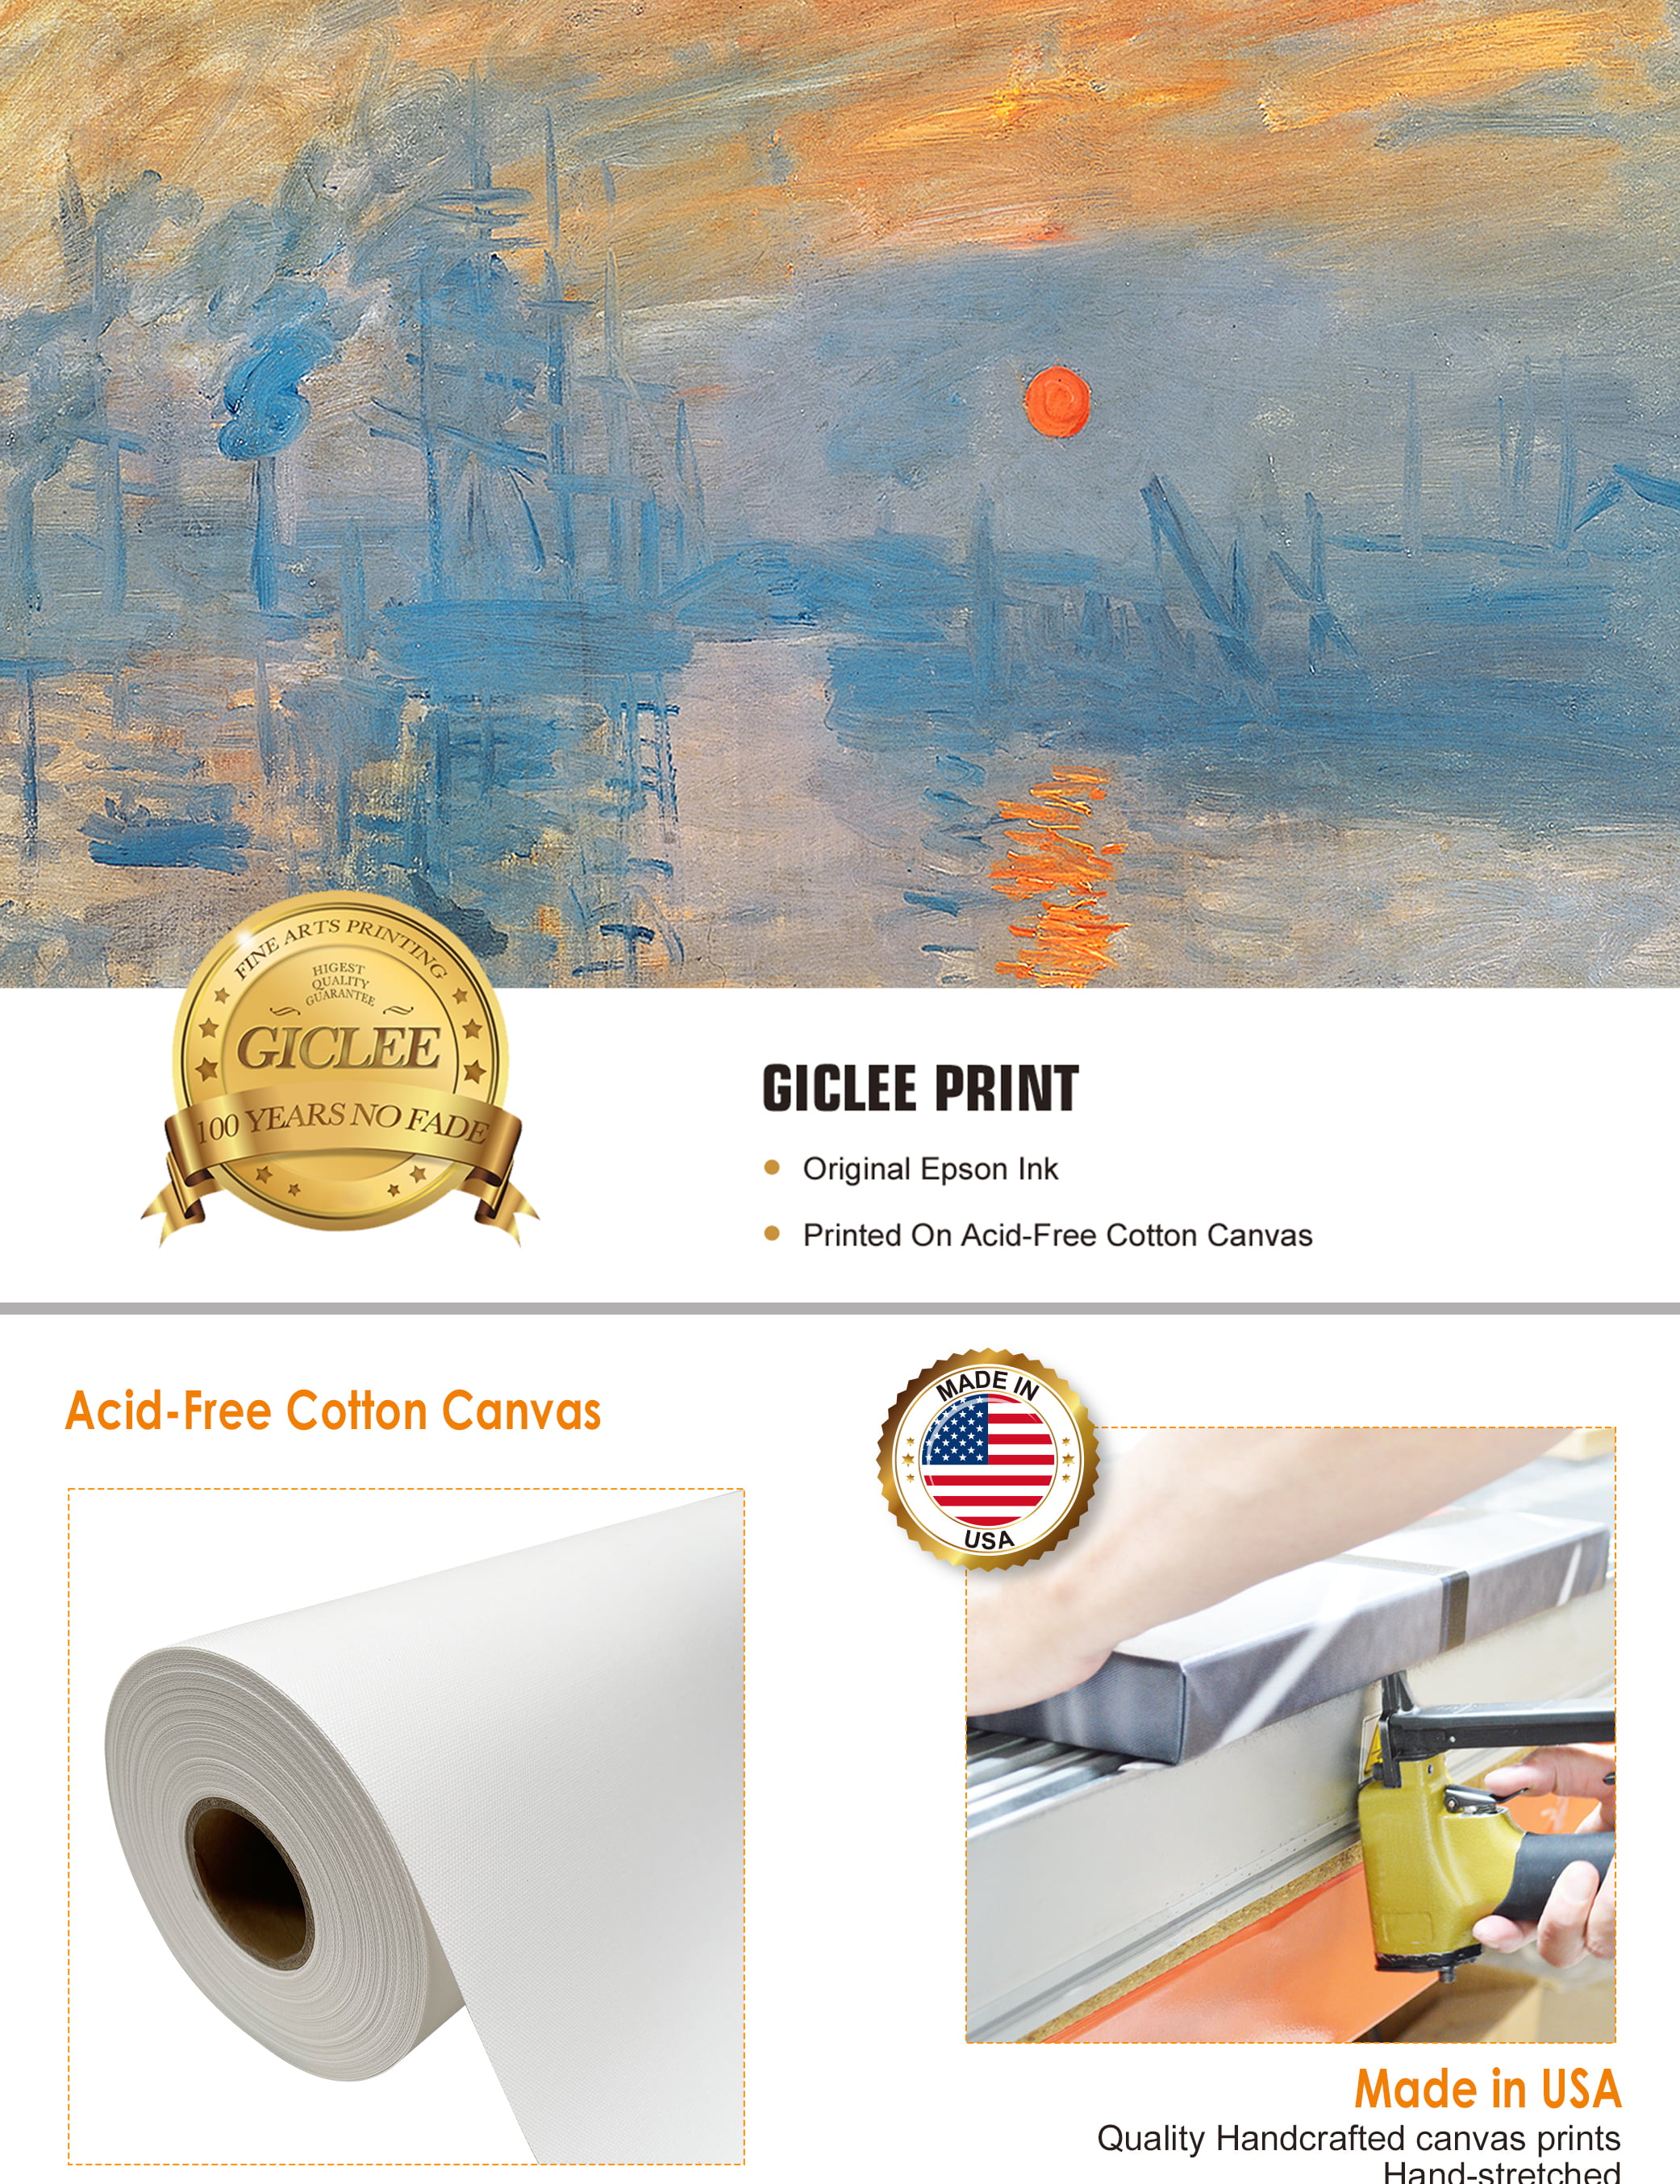 DECORARTS Impression Sunrise, Claude Monet Art Reproduction. Giclee  Canvas Prints Wall Art for Home Decor 24x20